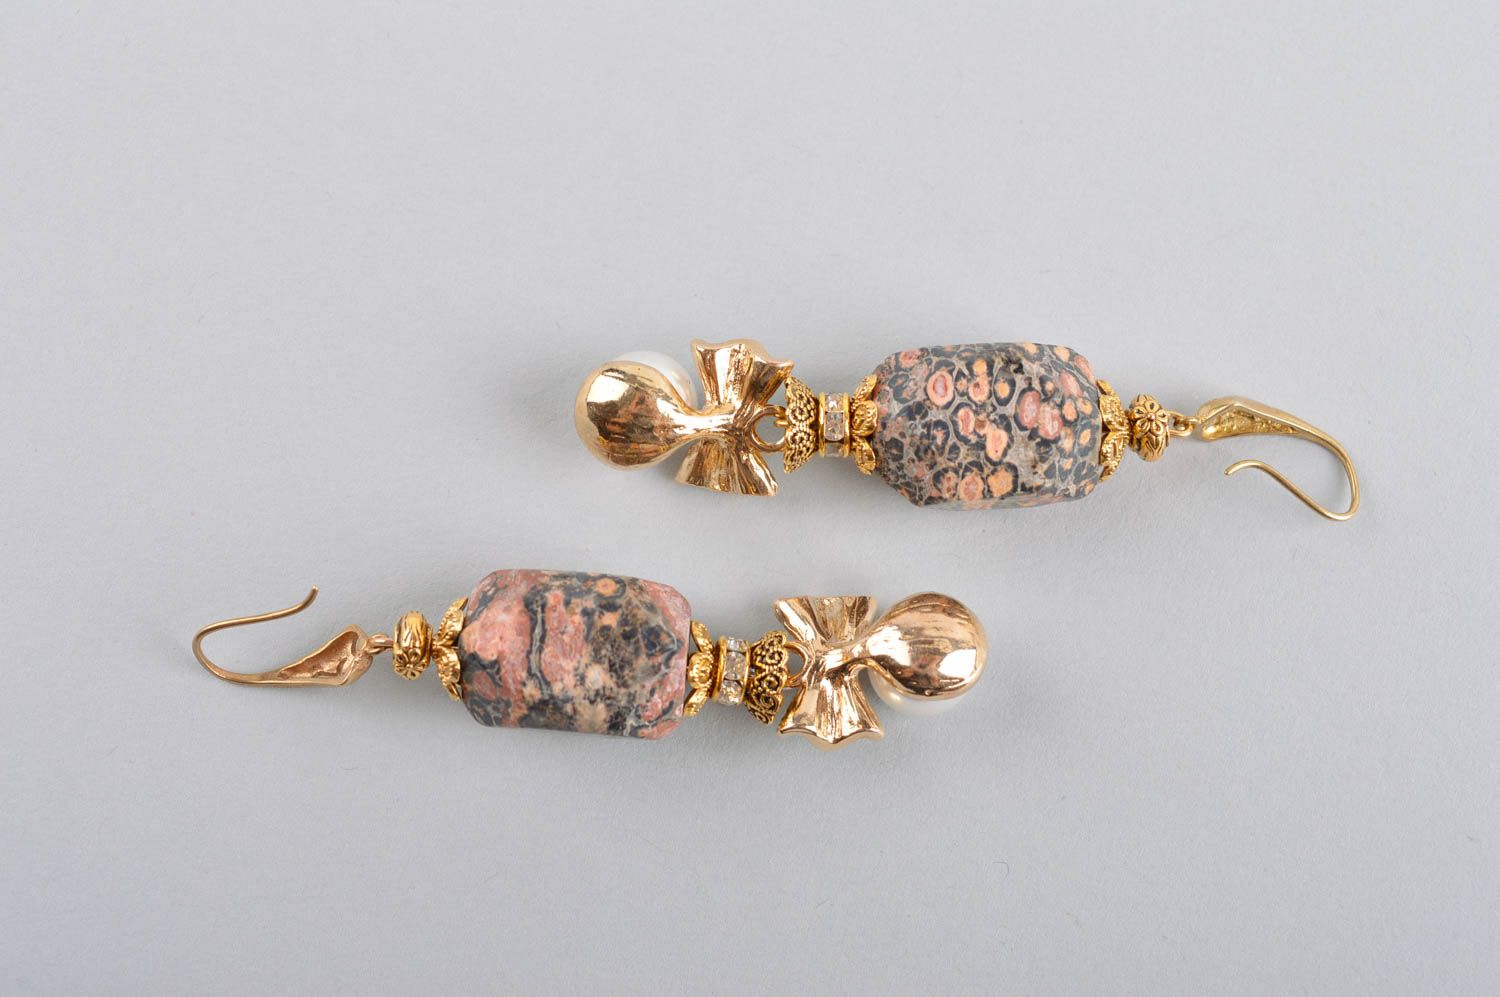 Gemstone earrings handmade jewellery designer earrings best gifts for women photo 3